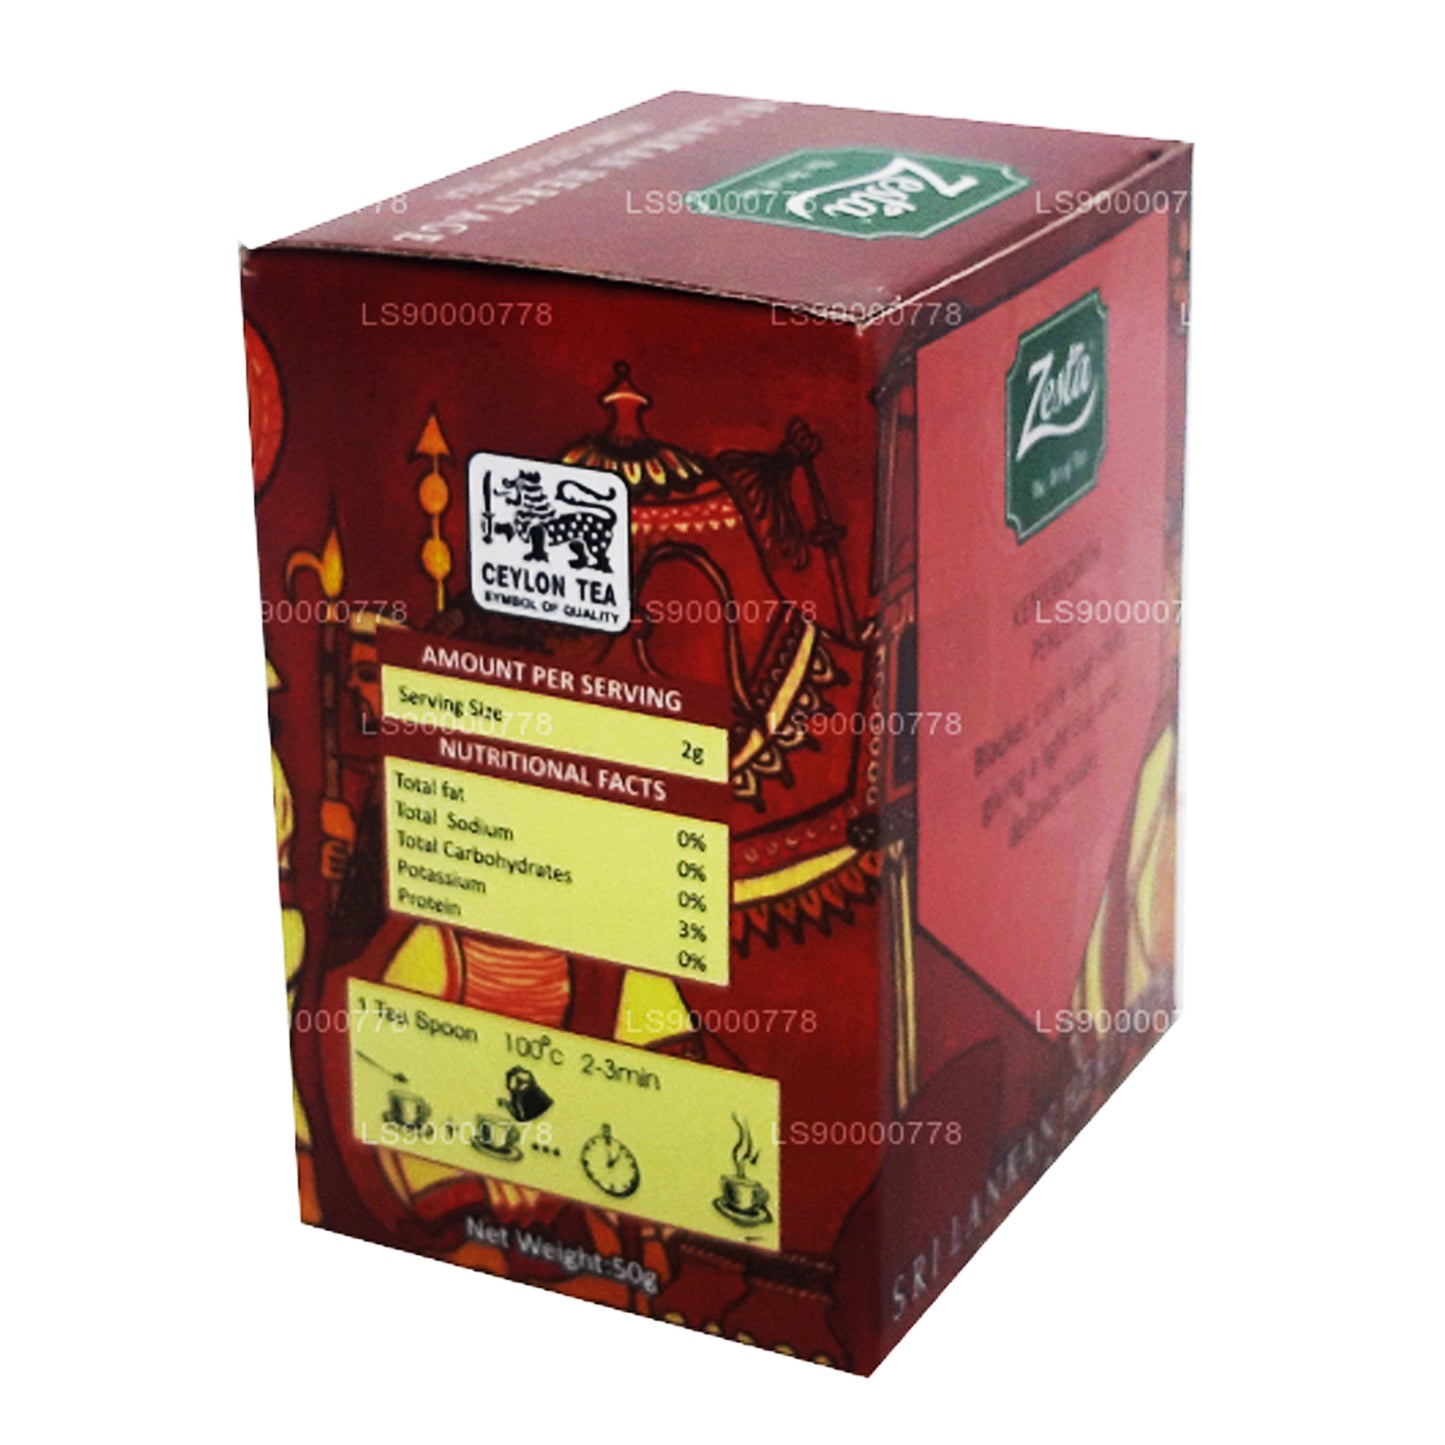 Zesta Sri Lankan Heritage Pure Ceylon Tea Kenilworth PEKOE 1 (100g)